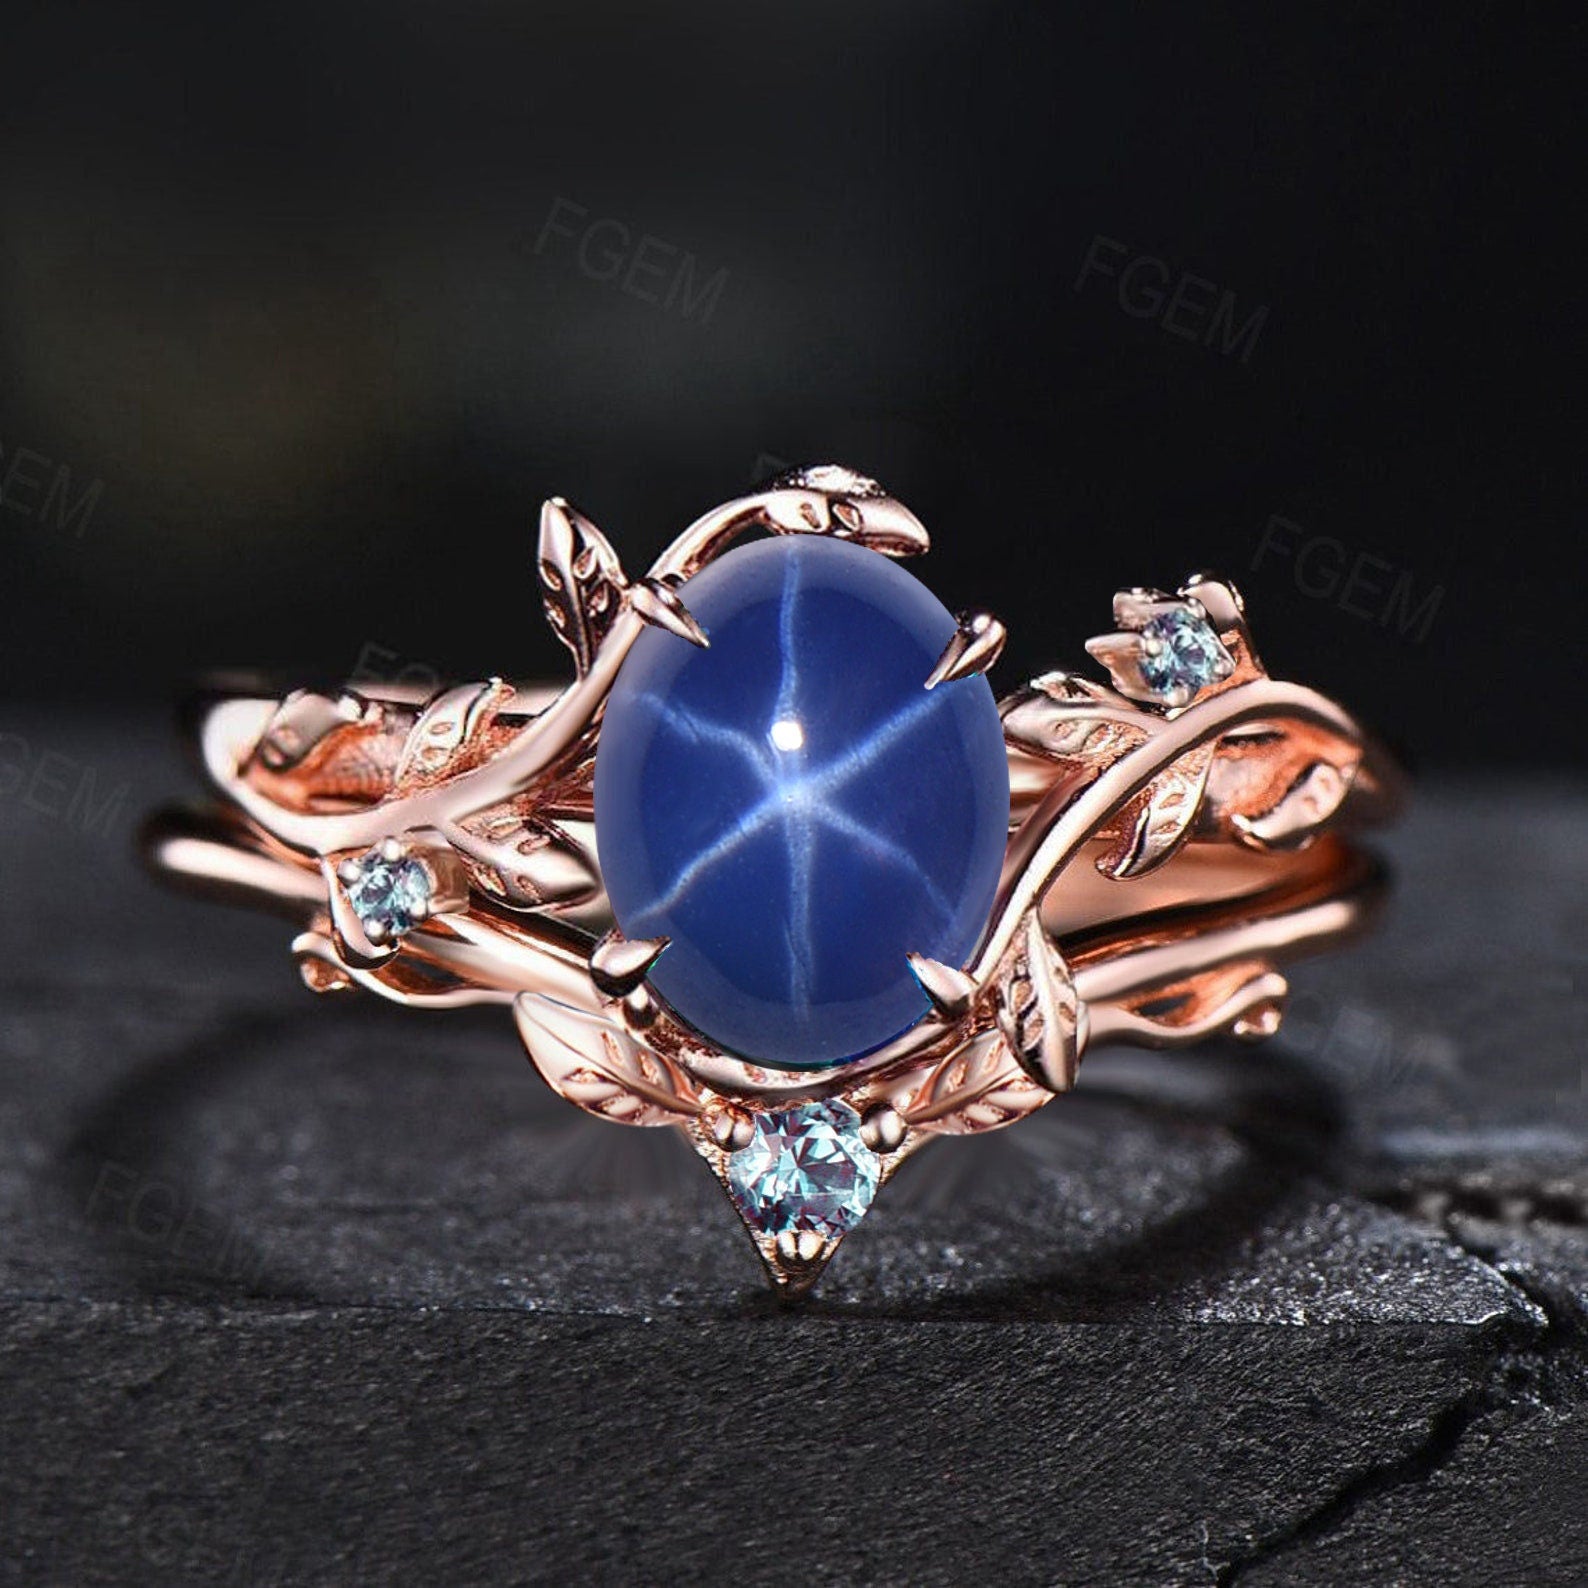 Natural Gray-Blue Star Sapphire 10.06 carats set in 14K White Gold Ring  with Diamonds / Jupitergem